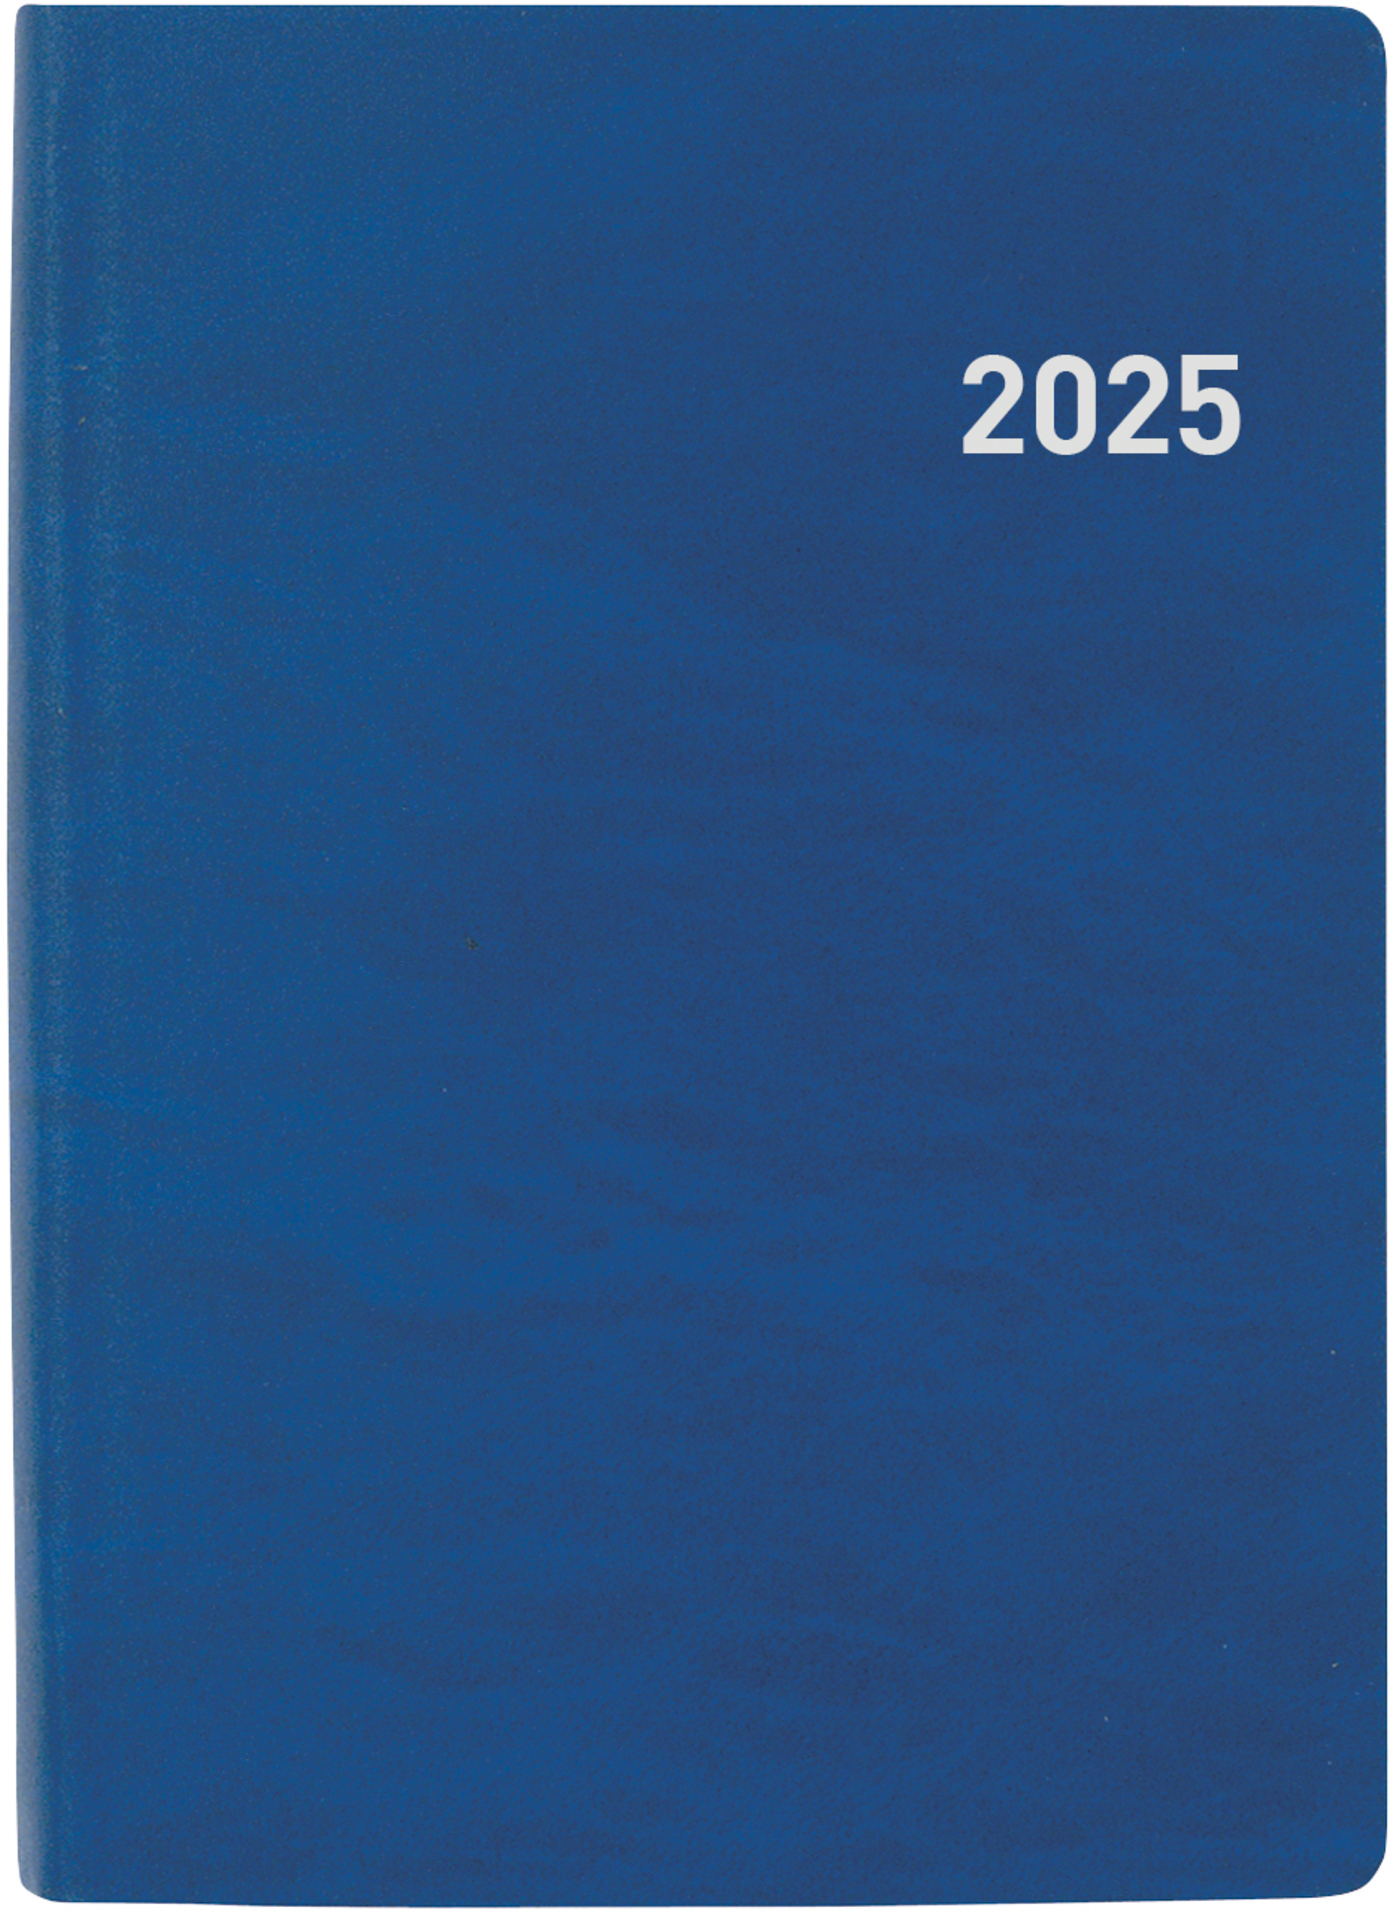 BIELLA Agenda Memento 2025 825401050025 1S/2P bleu ML 10.1x14.2cm